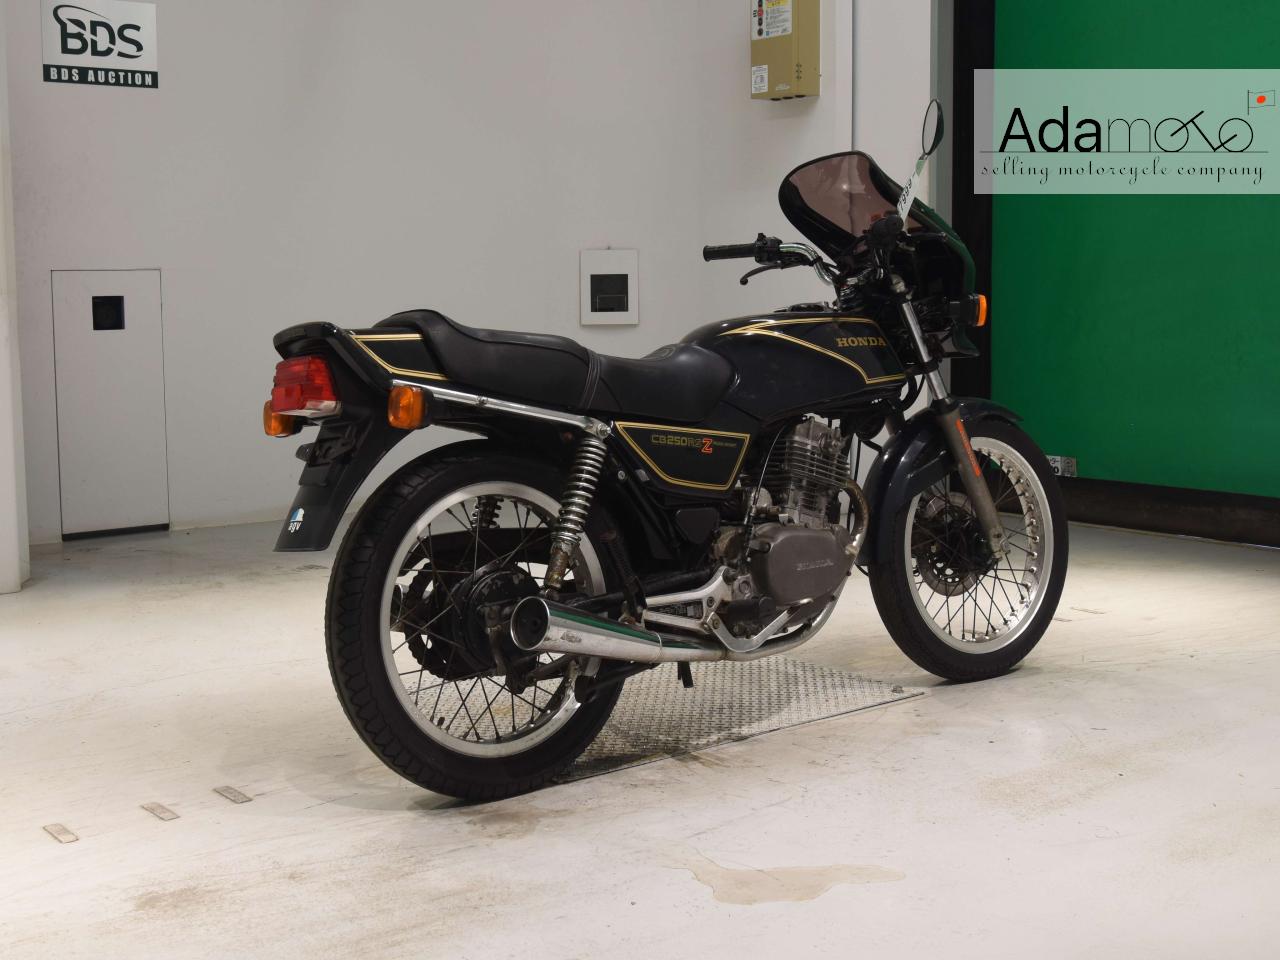 Honda CB250RS Z - Adamoto - Motorcycles from Japan